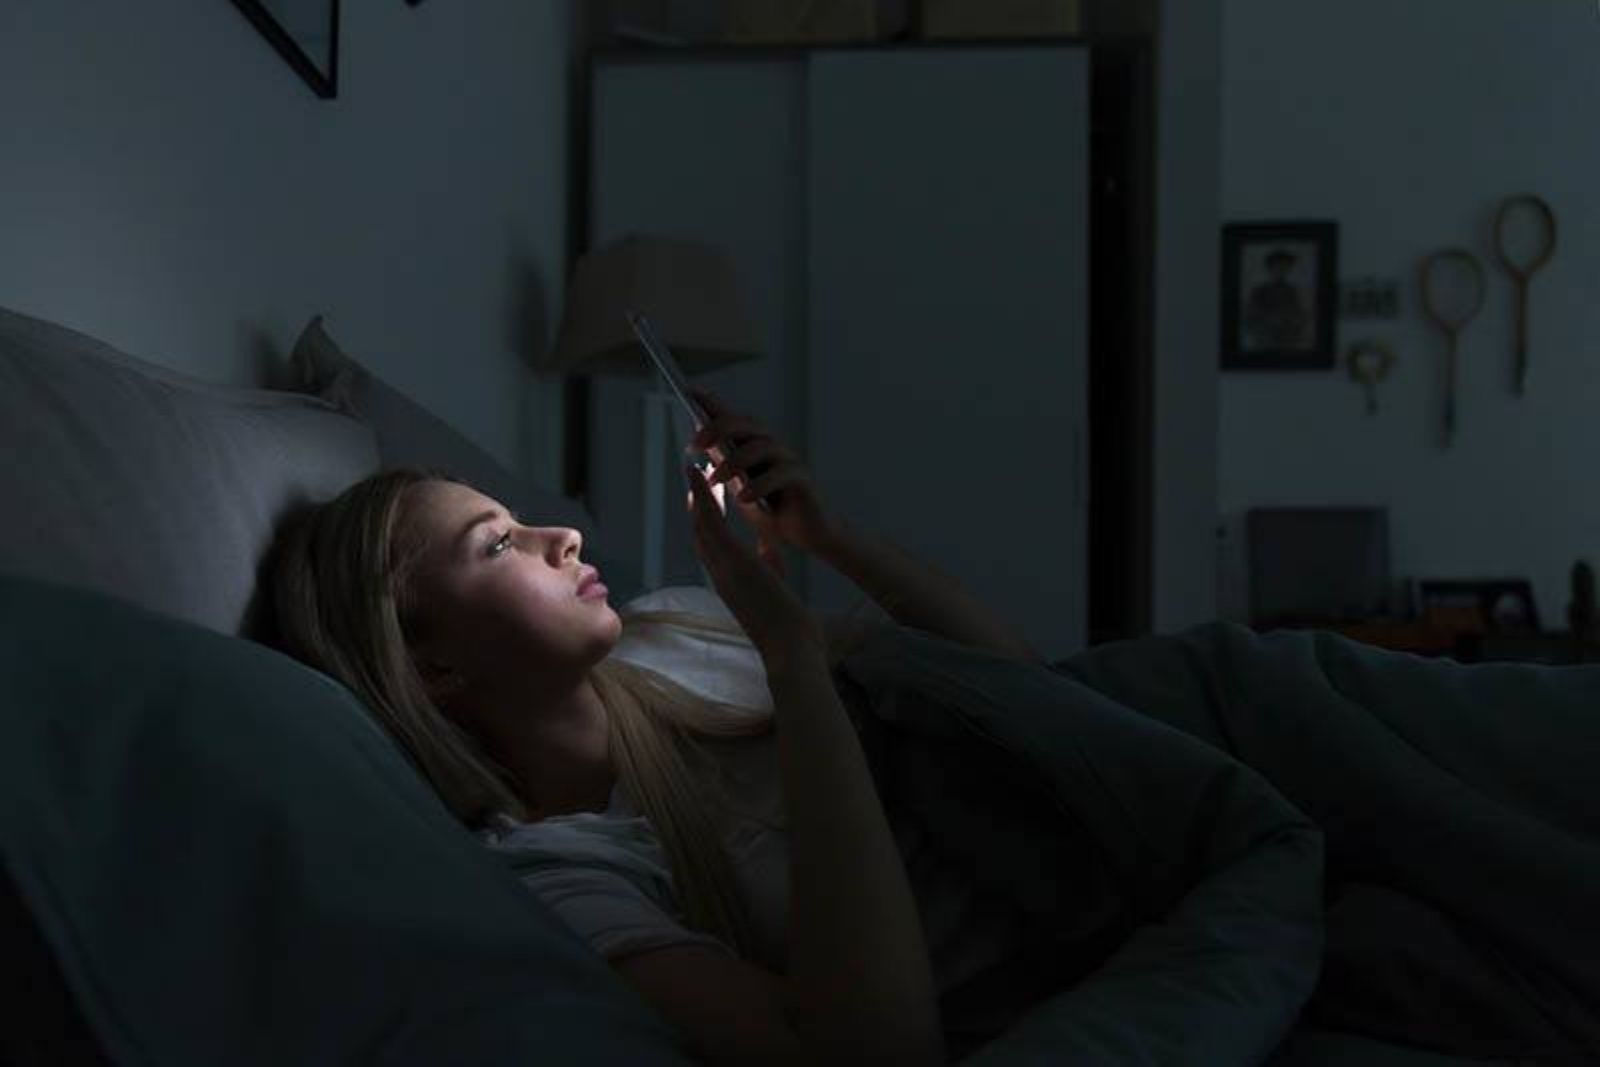 mujer tecleando su teléfono por la noche